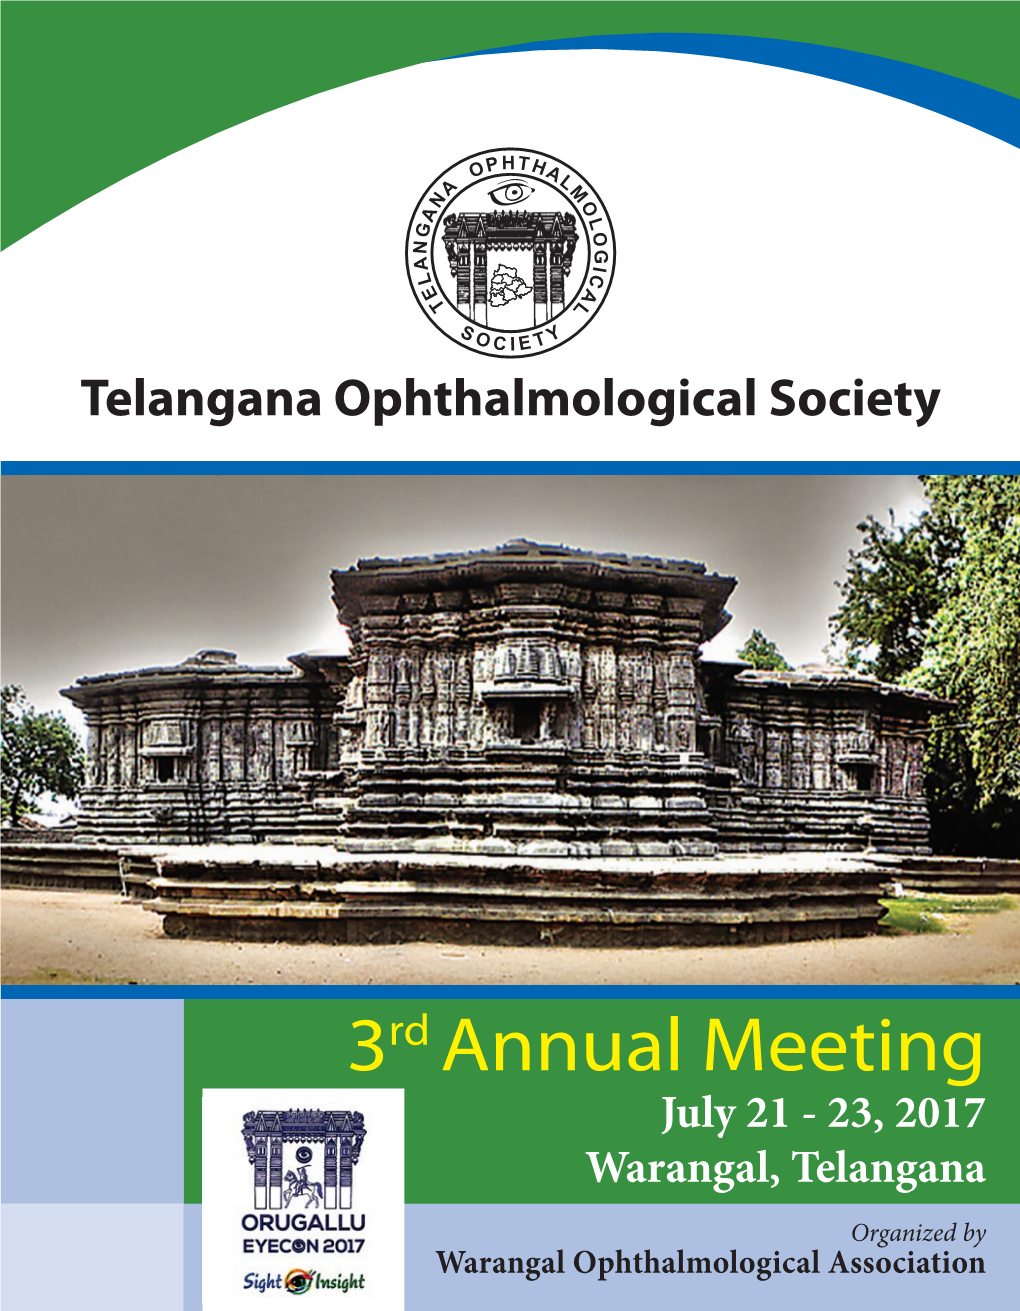 3Rd Annual Meeting July 21 - 23, 2017 Warangal, Telangana Organized by Warangal Ophthalmological Association OPHTHA L a M N O a L